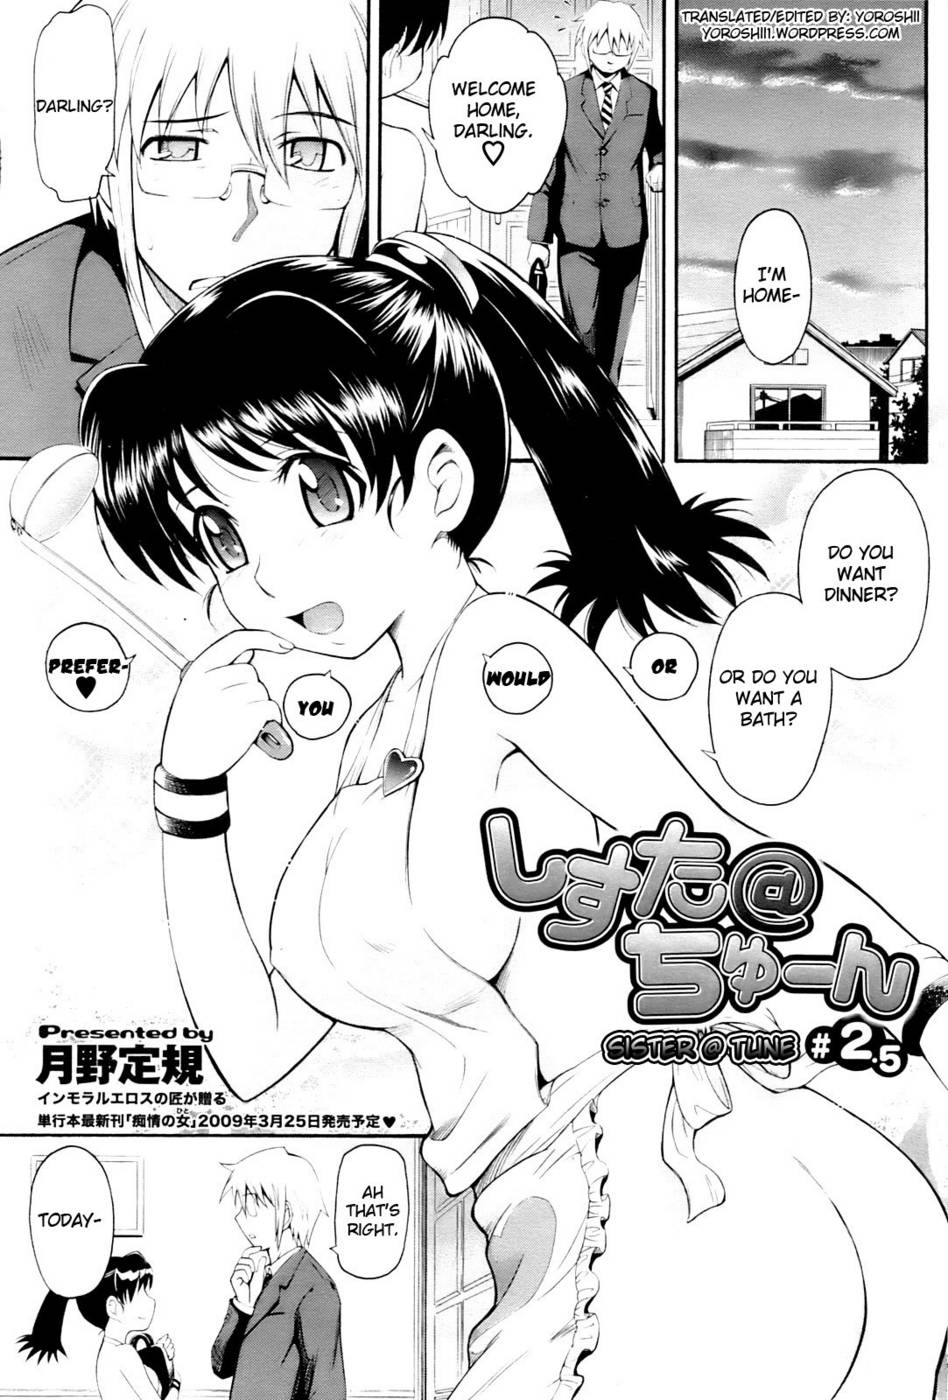 Hentai Manga Comic-Sister @ Tune-Chap2.5-1